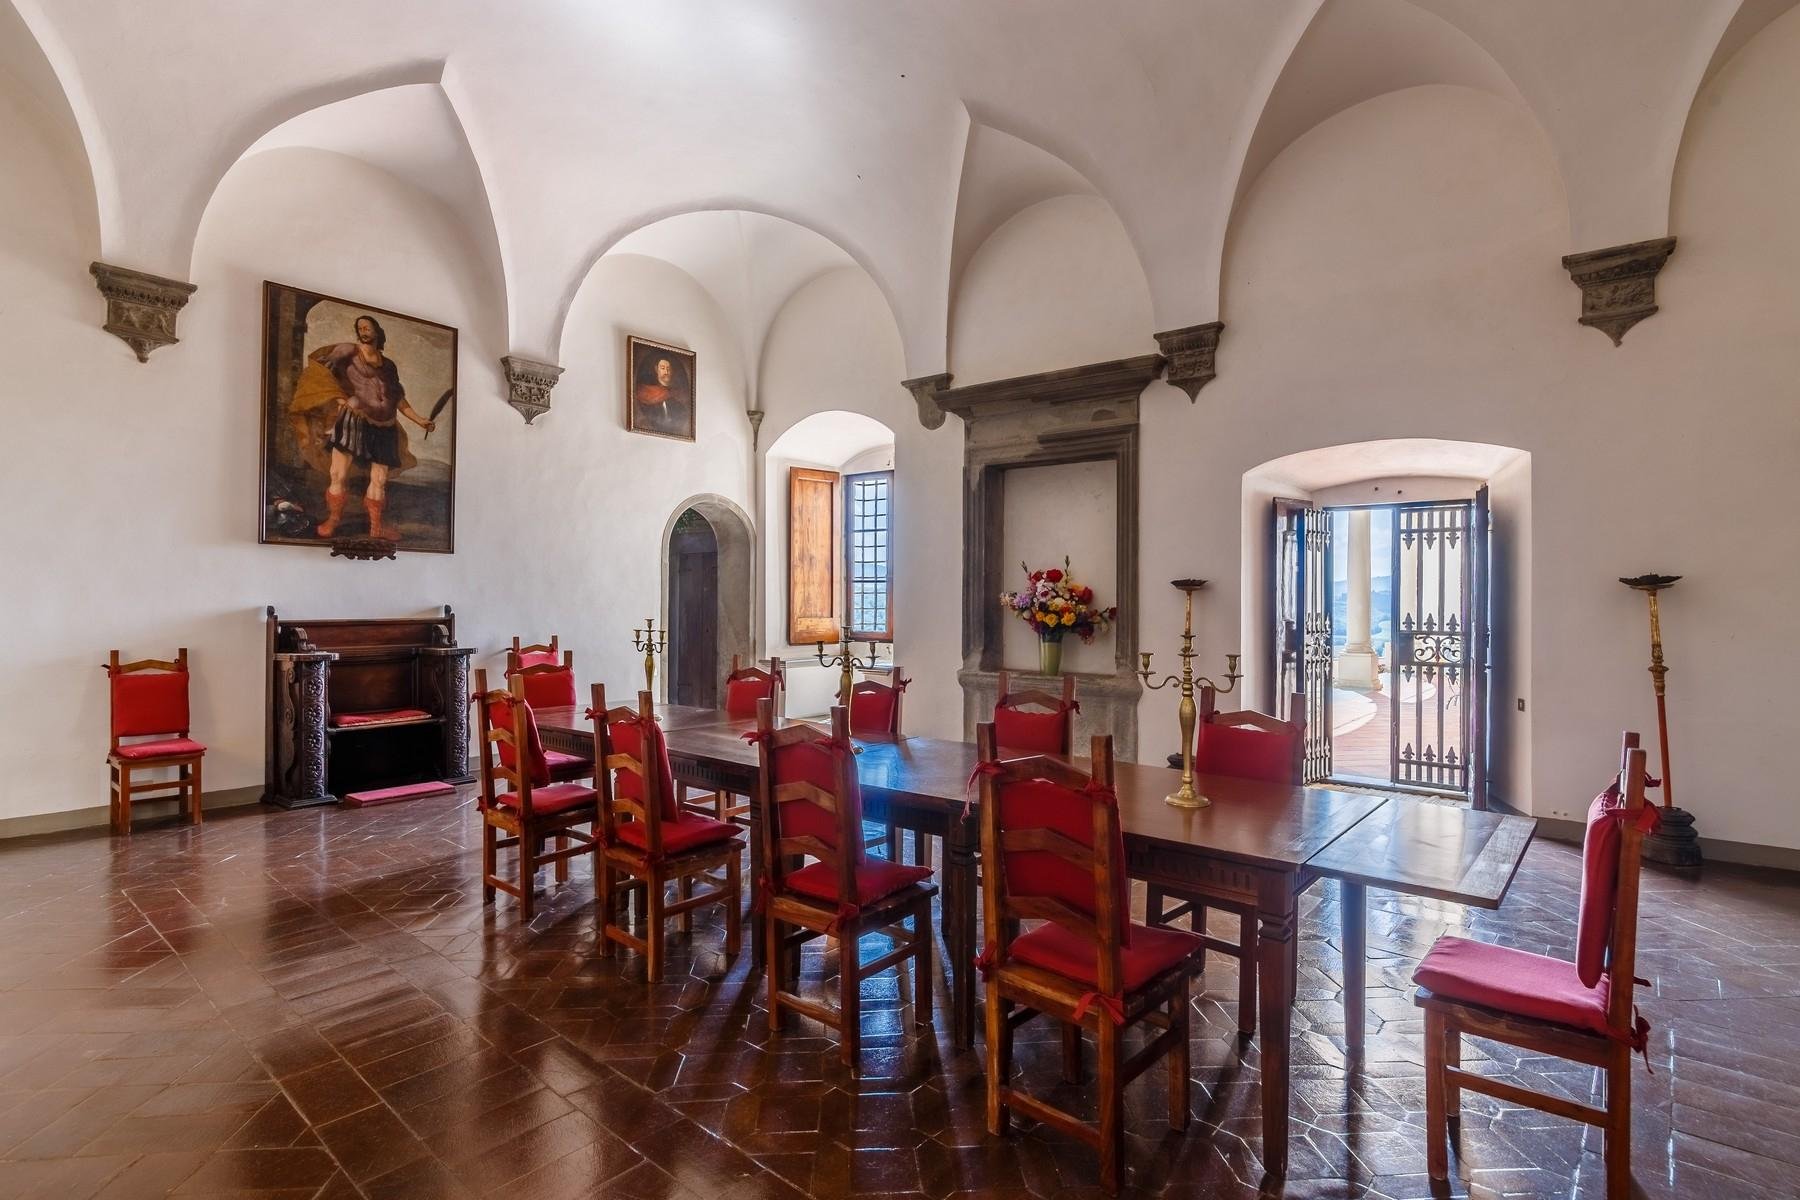 Francis York Medieval Castle Turned Renaissance Villa in Tuscany, Italy  00017.jpg